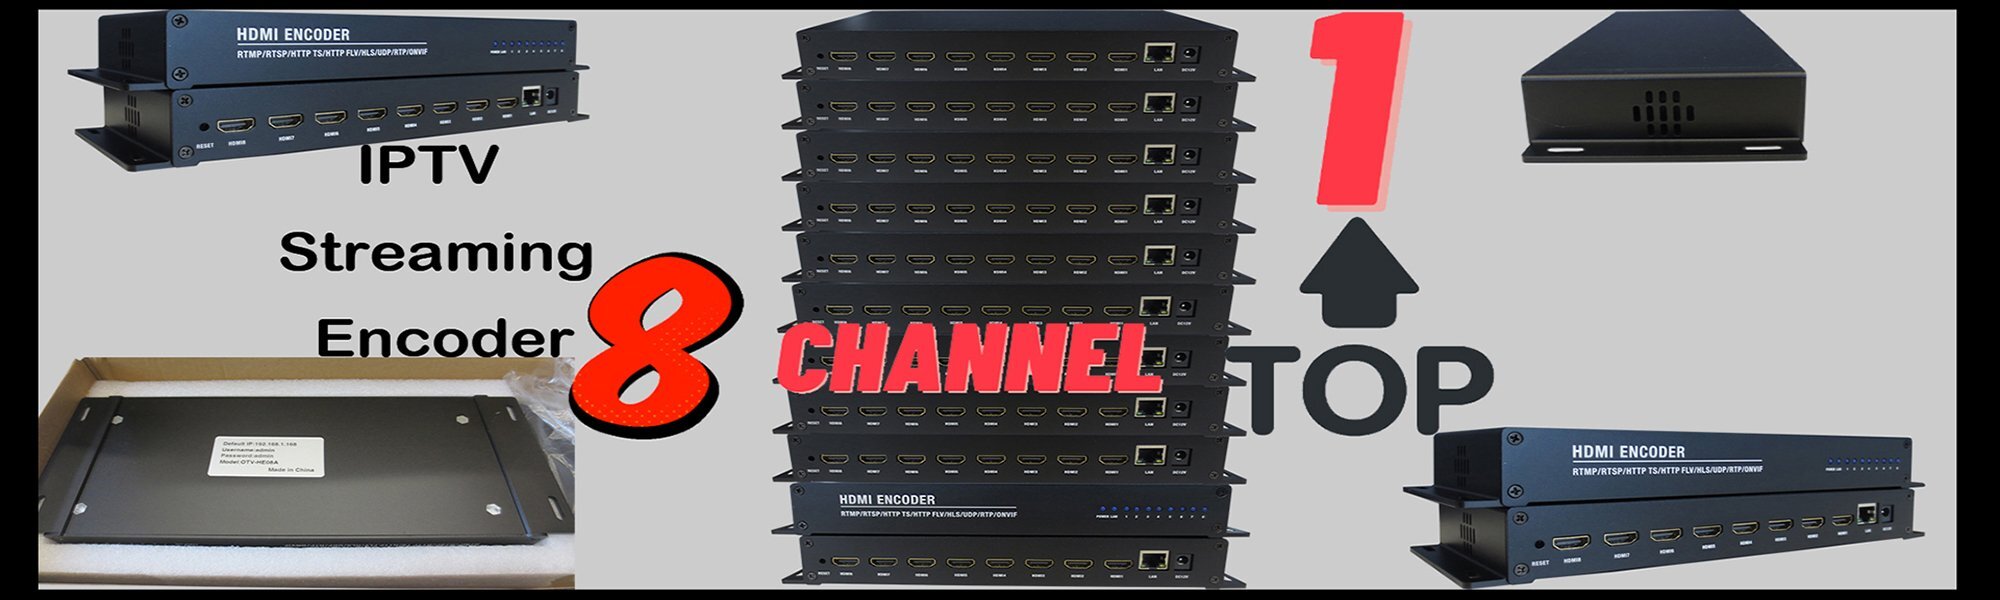 8 channel hd video streaming encoder iptv